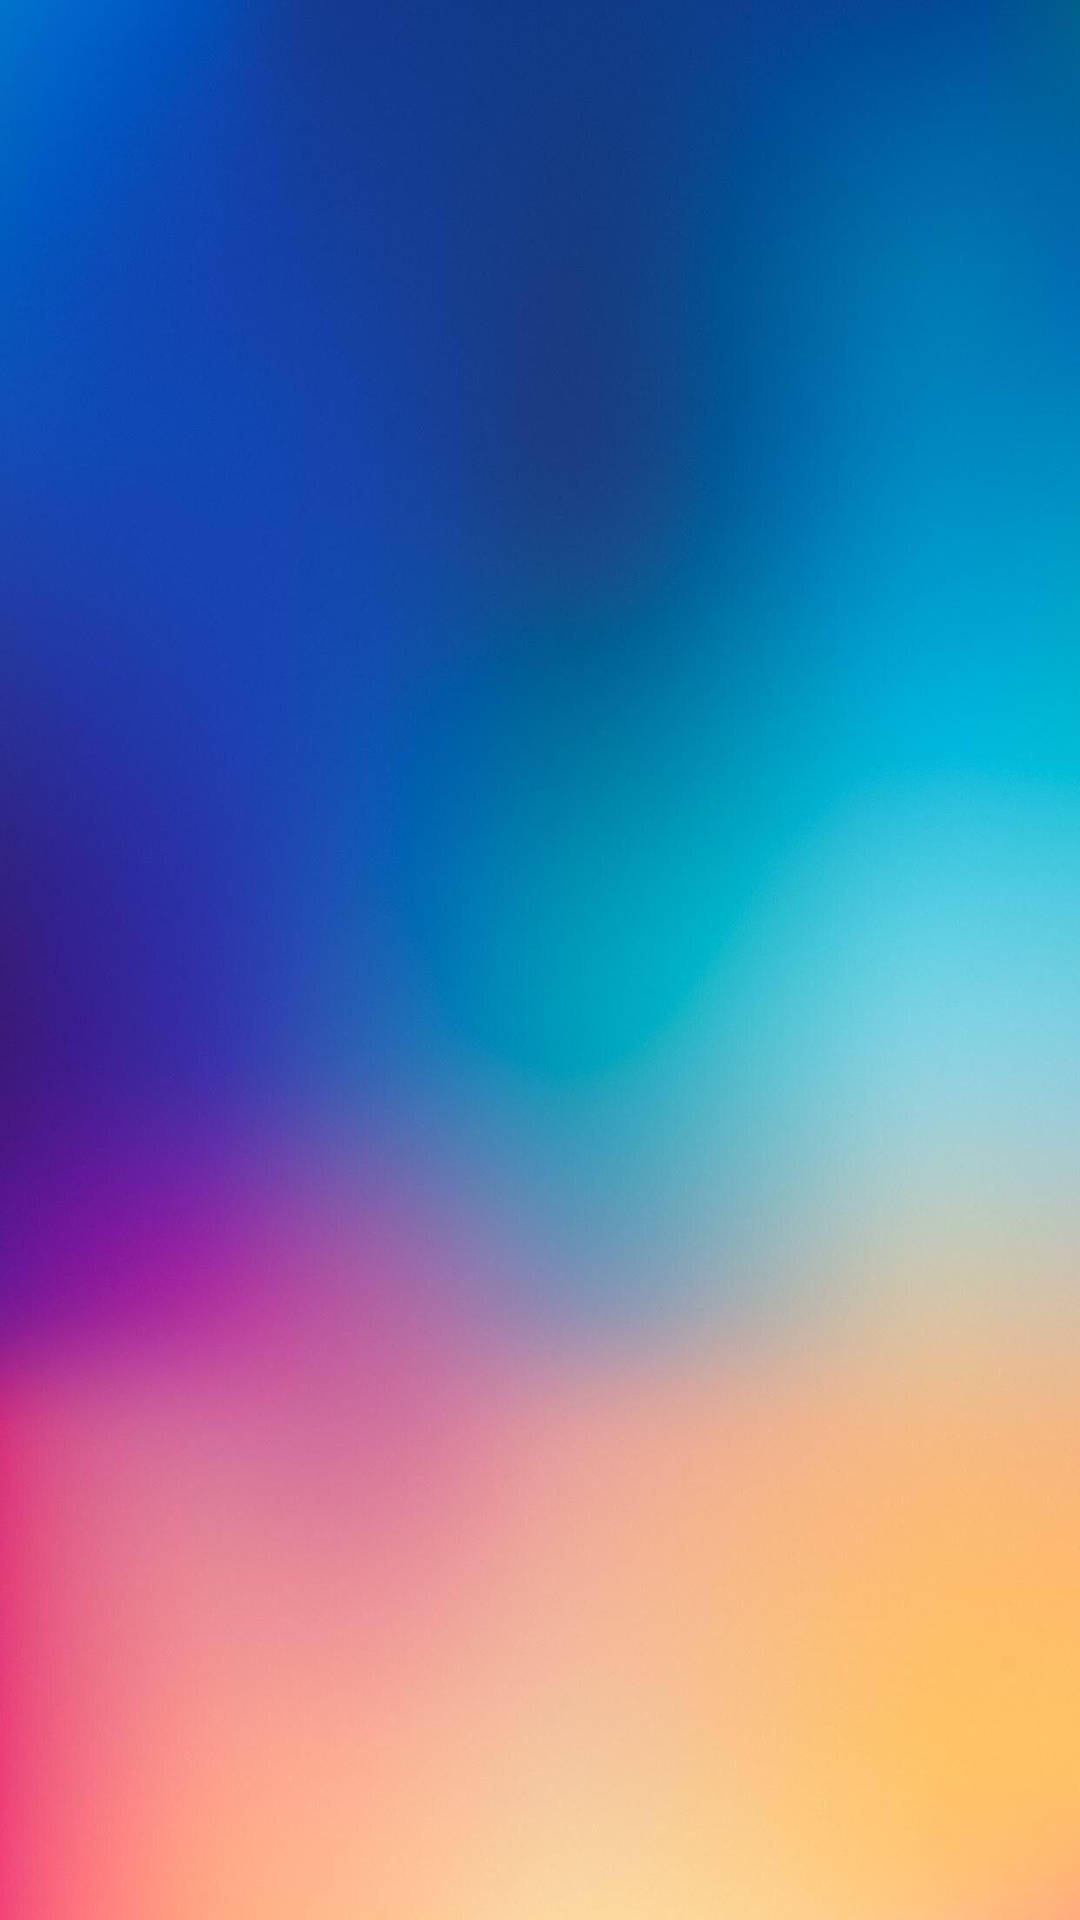 Plain Blue Orange Blur Gradient iPhone Wallpaper